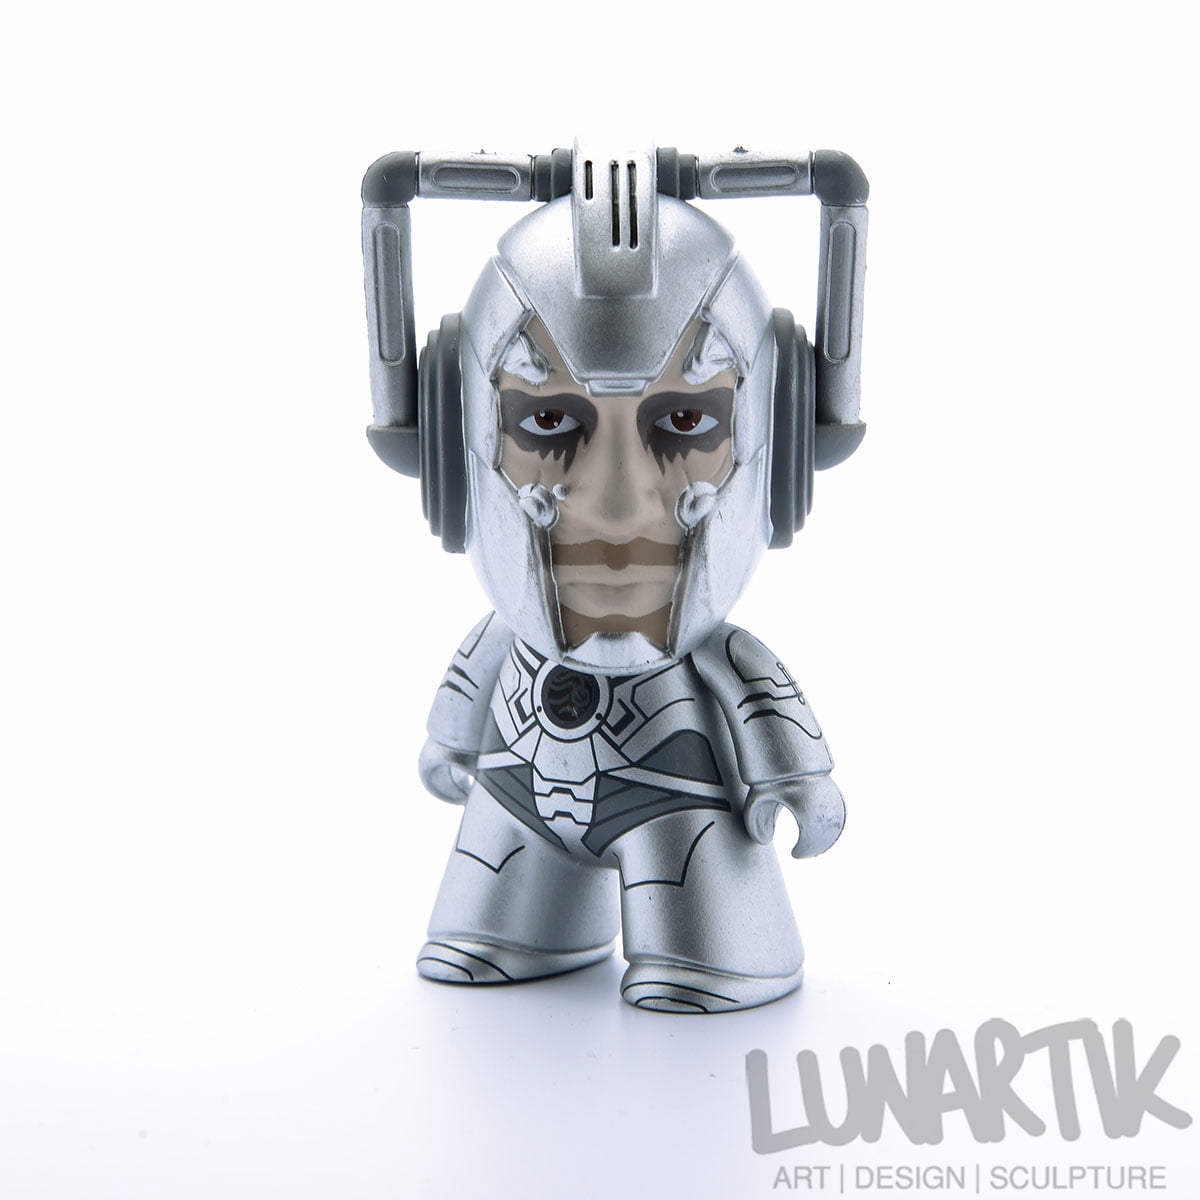 Doctor Who Titans Figure by Matt Jones aka Lunartik